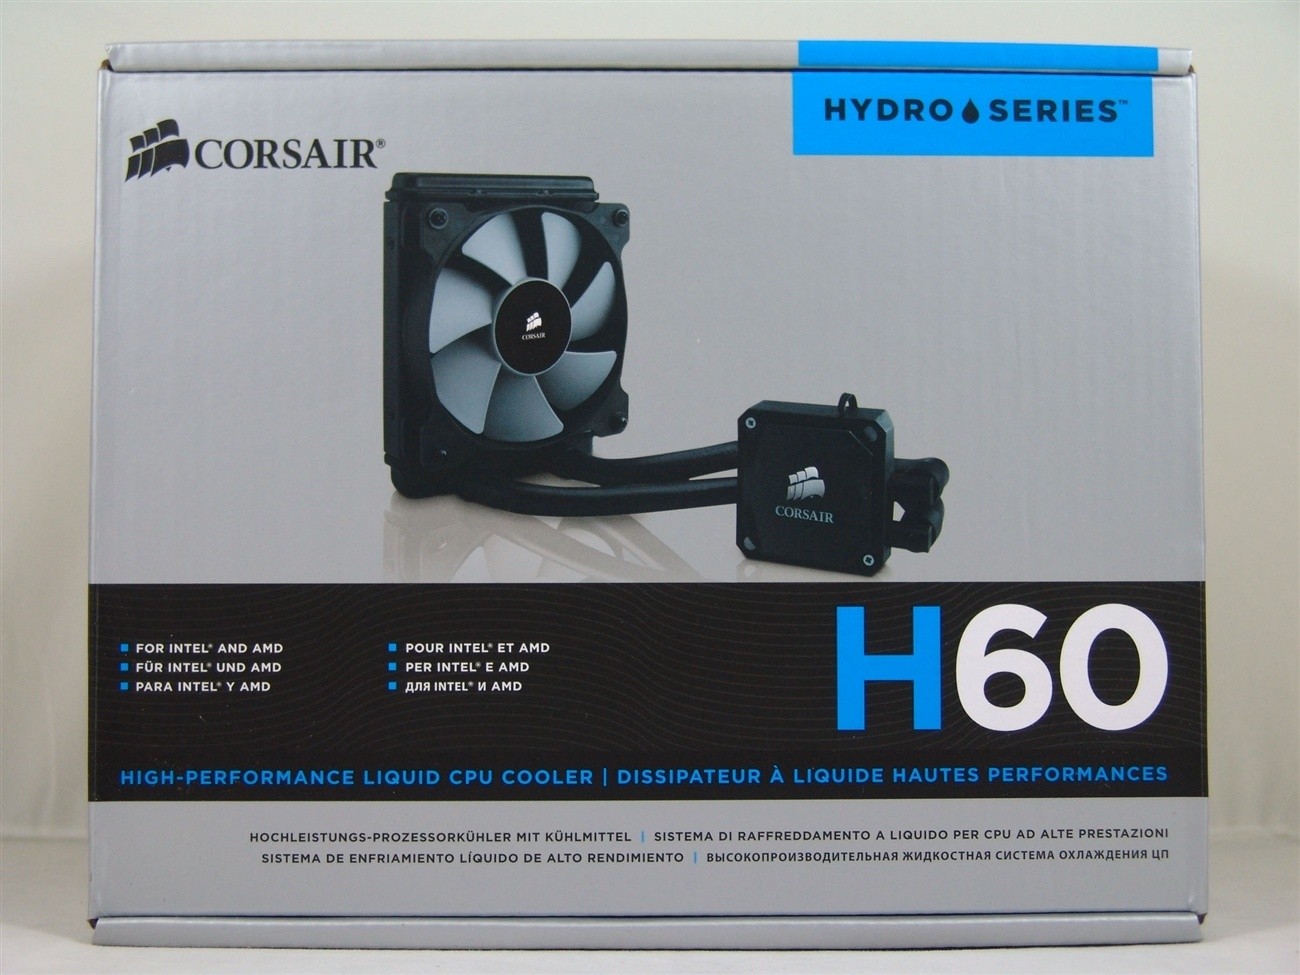 Corsair Hydro Series (2012 Liquid CPU Cooler Review